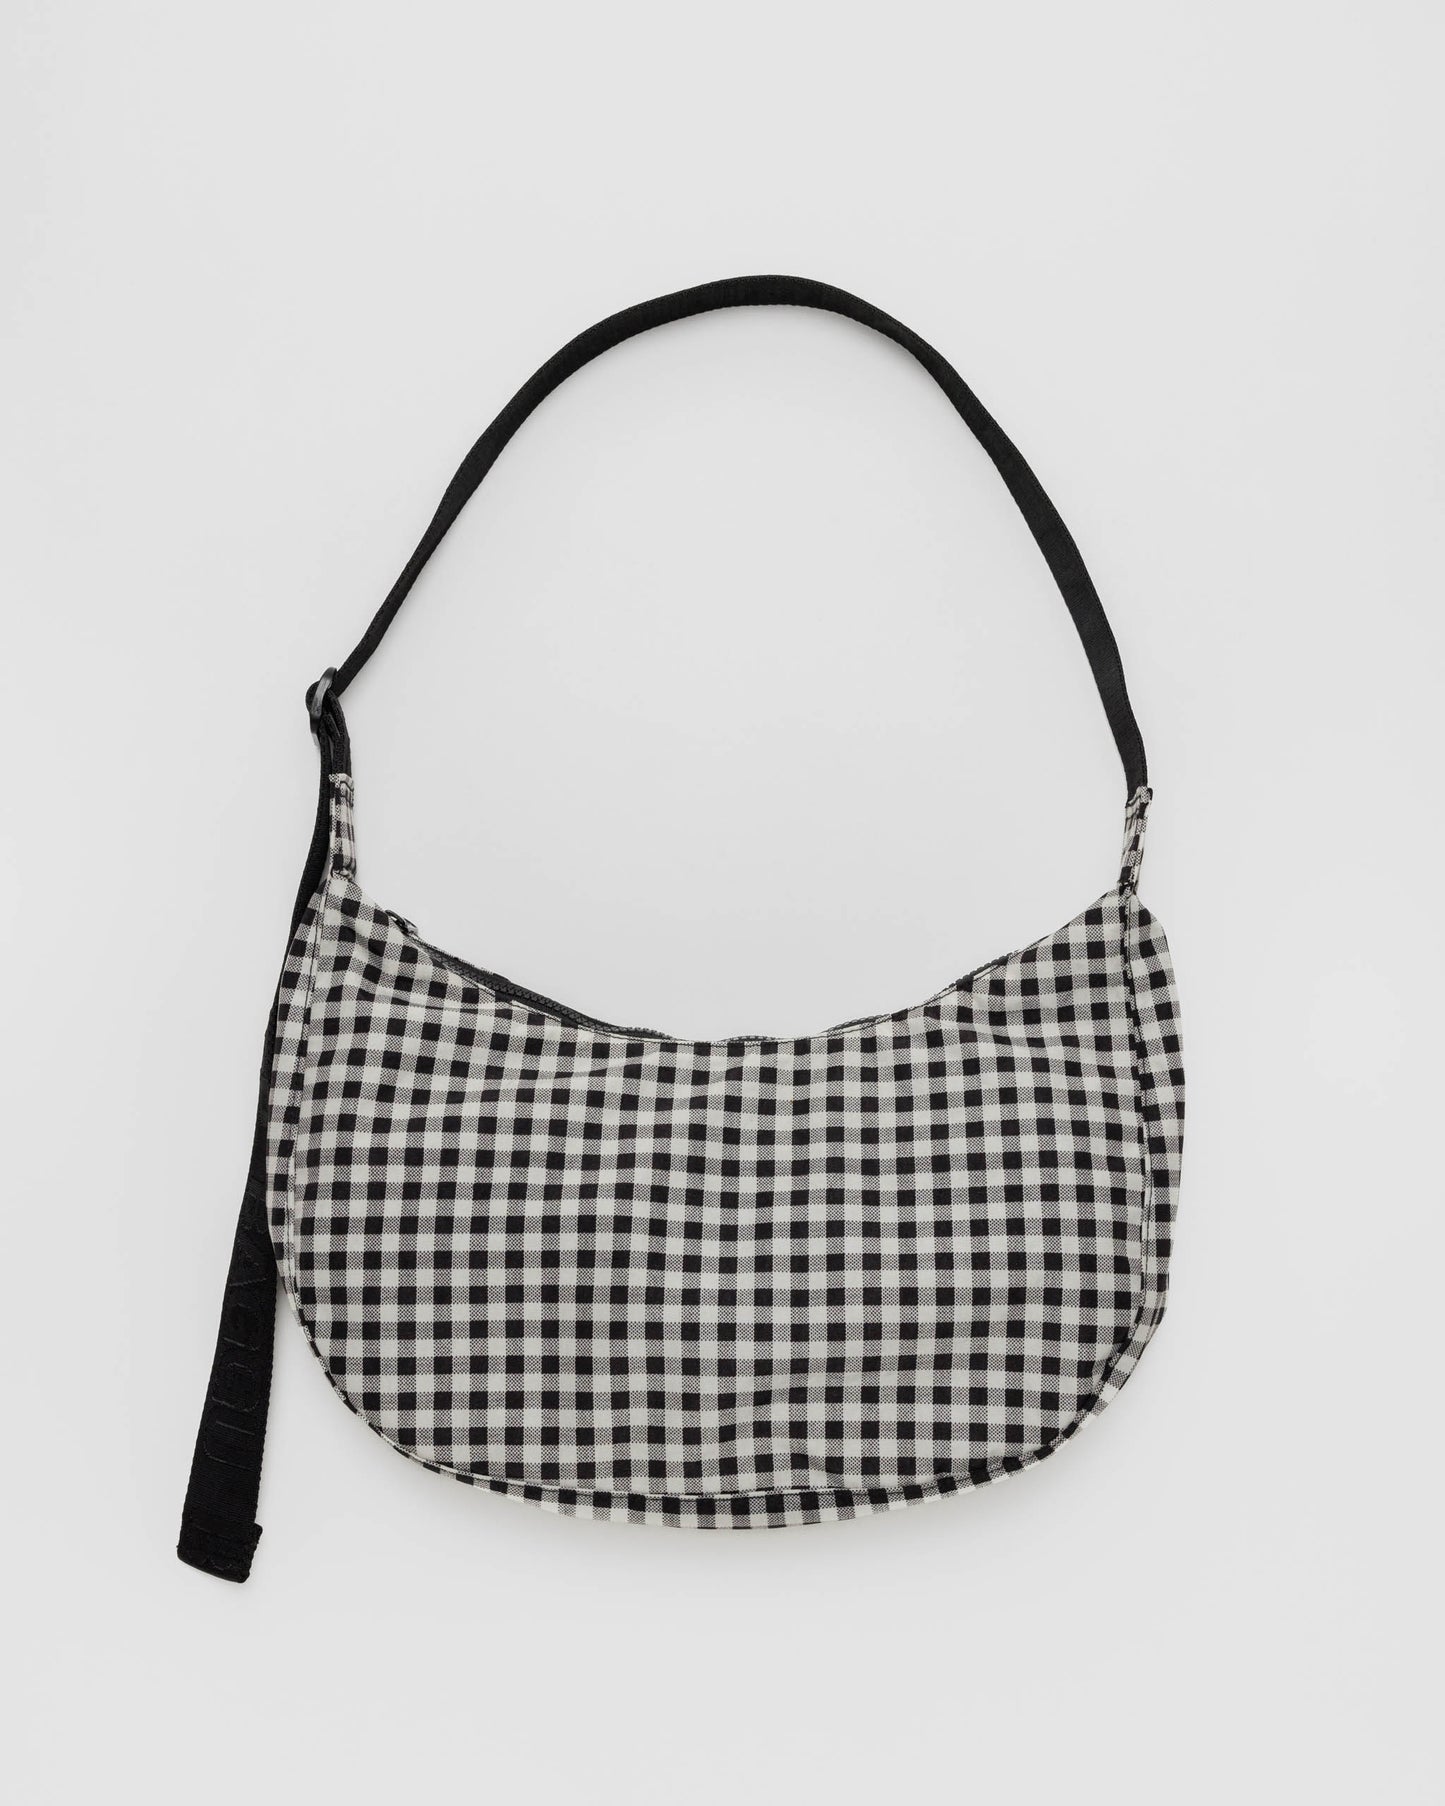 BAGGU medium nulon crescent bag in black and white gingham pattern